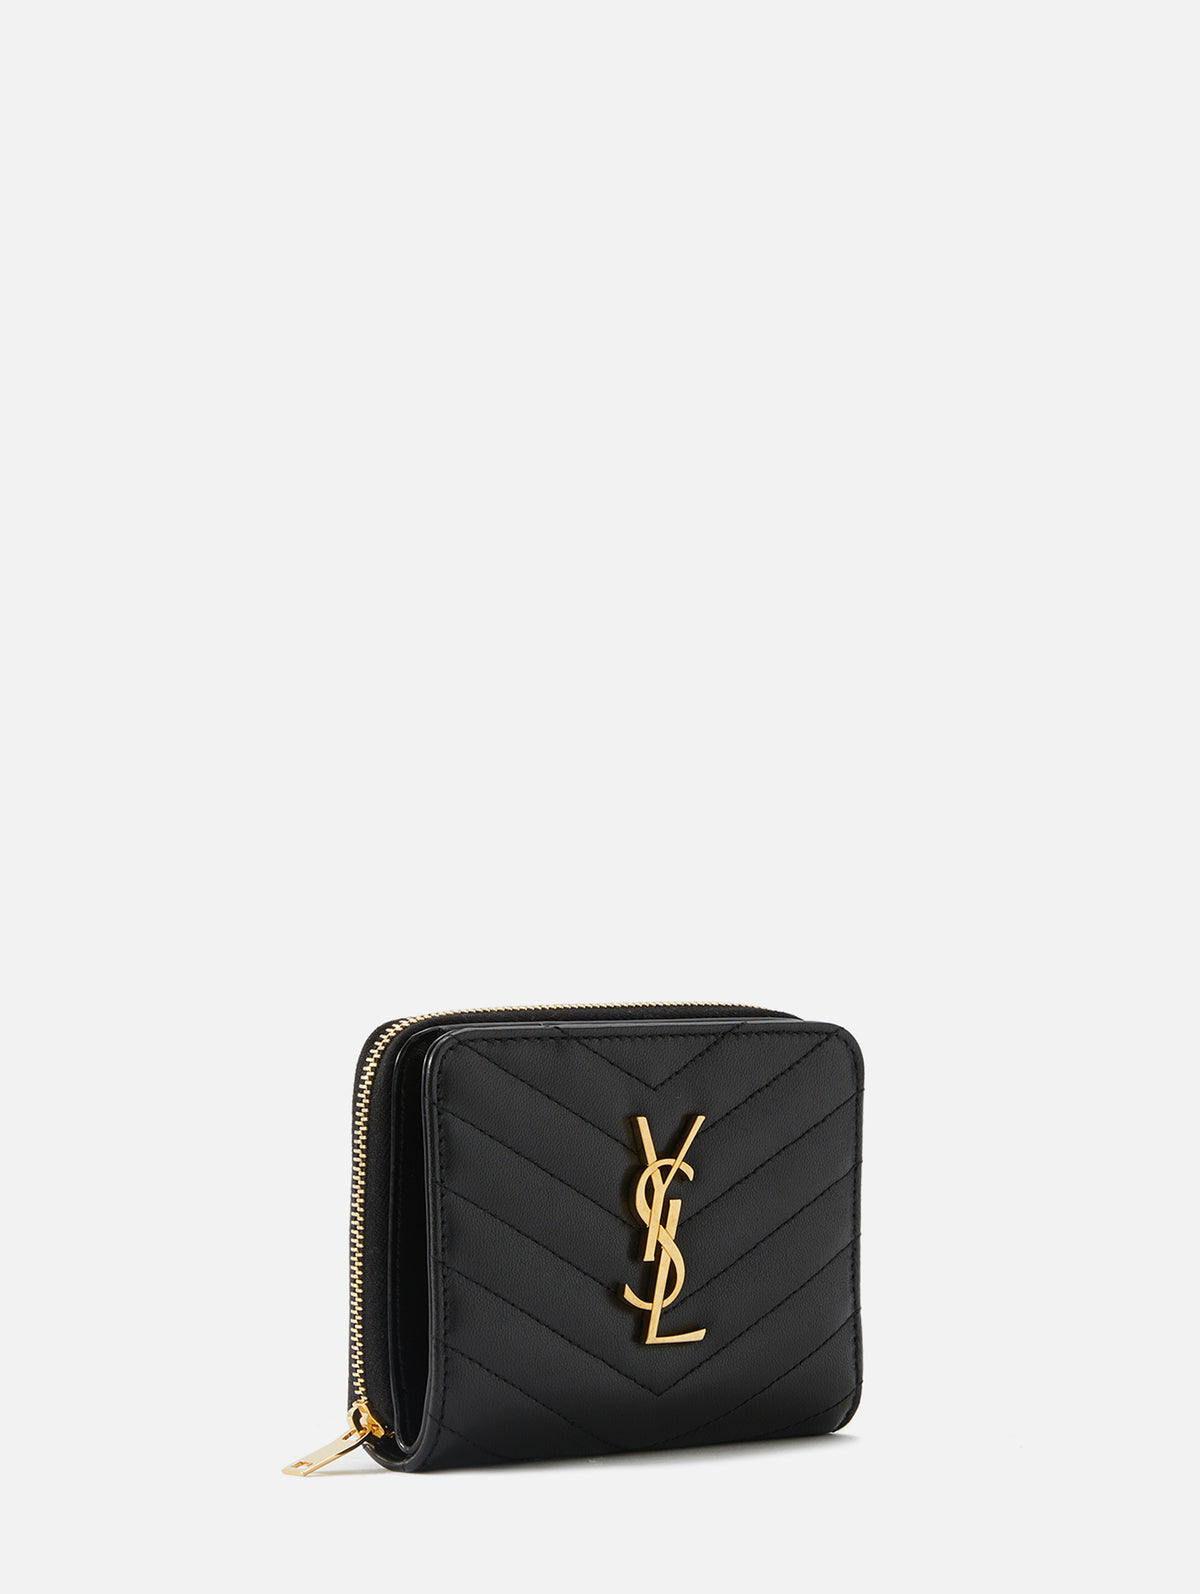 Monogram Compact Leather Wallet in Black - Saint Laurent